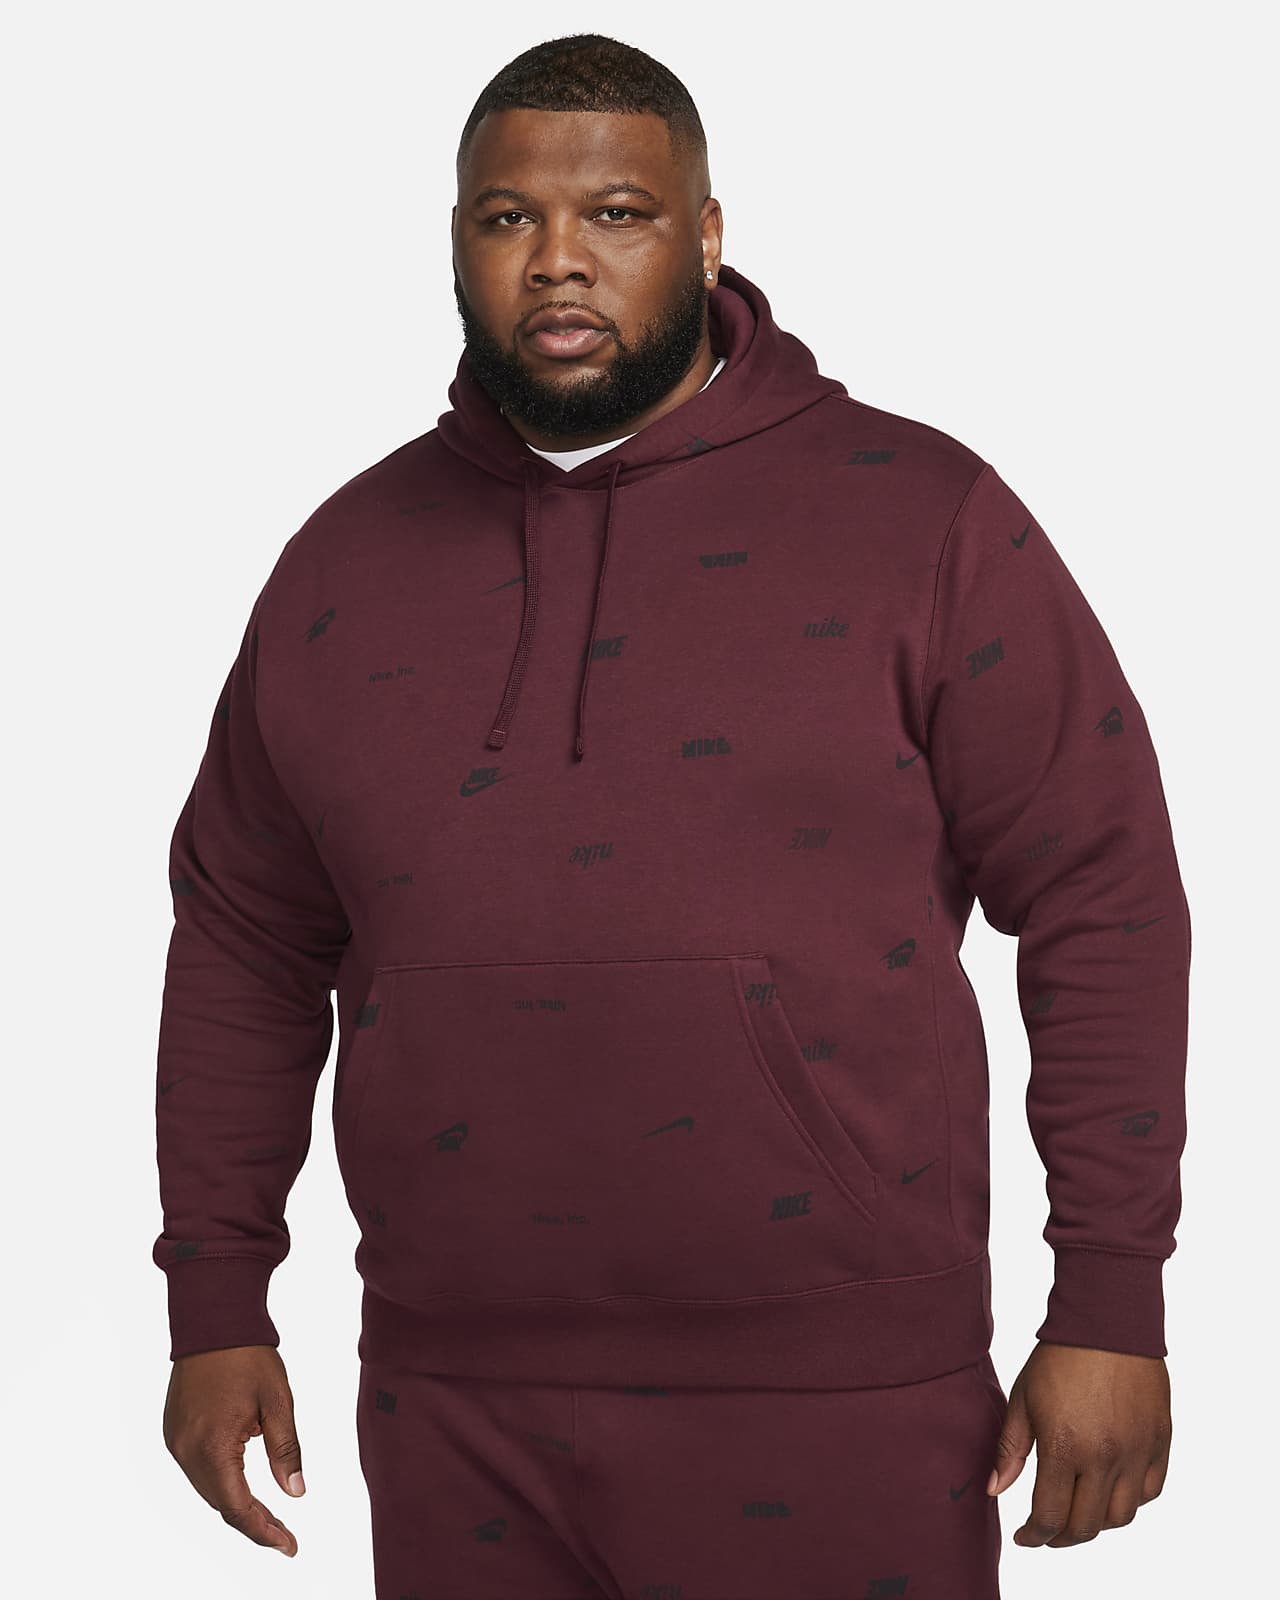 Branded, Stylish and Premium Quality nike hoodie set 